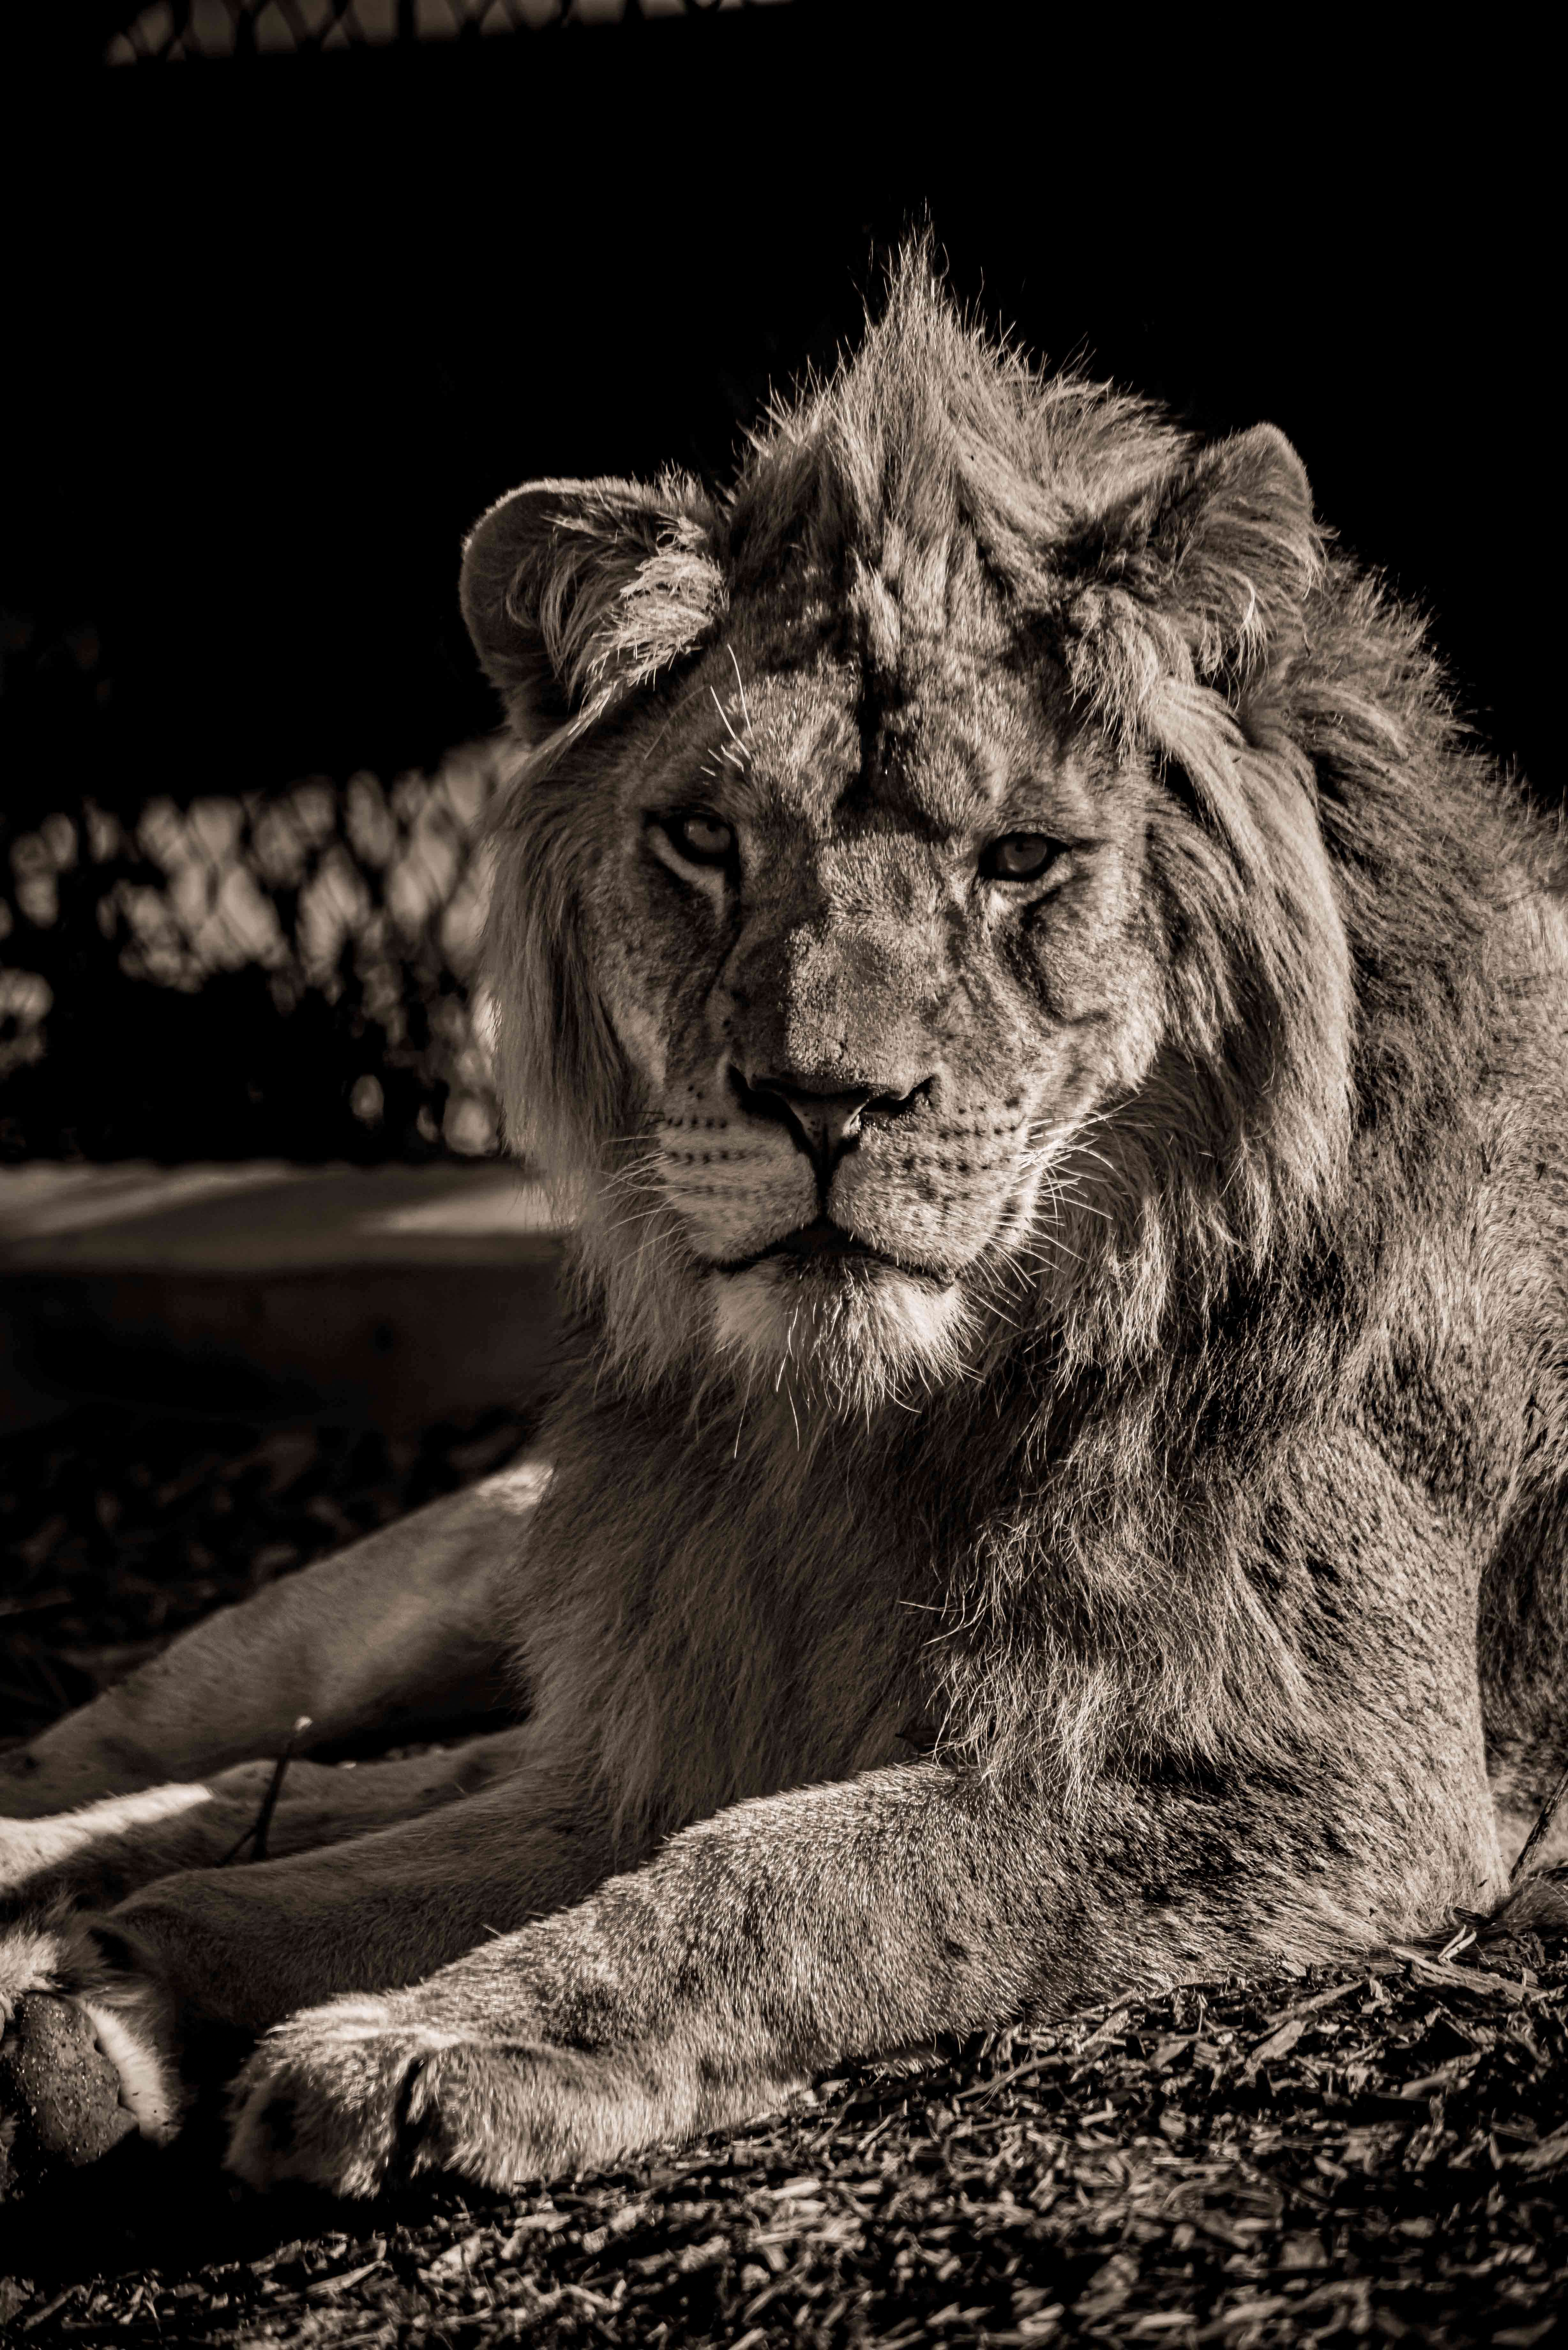 SEMD229 - DSC_7678 Sepia - 
African Savannah Lion, Taronga Zoo,  Sydney, NSW, Australia.
1st July 2020 - 2.41pm
Camera - Nikon D800 
F5.6 - ISO 800 - 1/1250 second - Focal Length 250mm : Wildlife - Sepia : Stephen E-Moran - Fine Art Photography